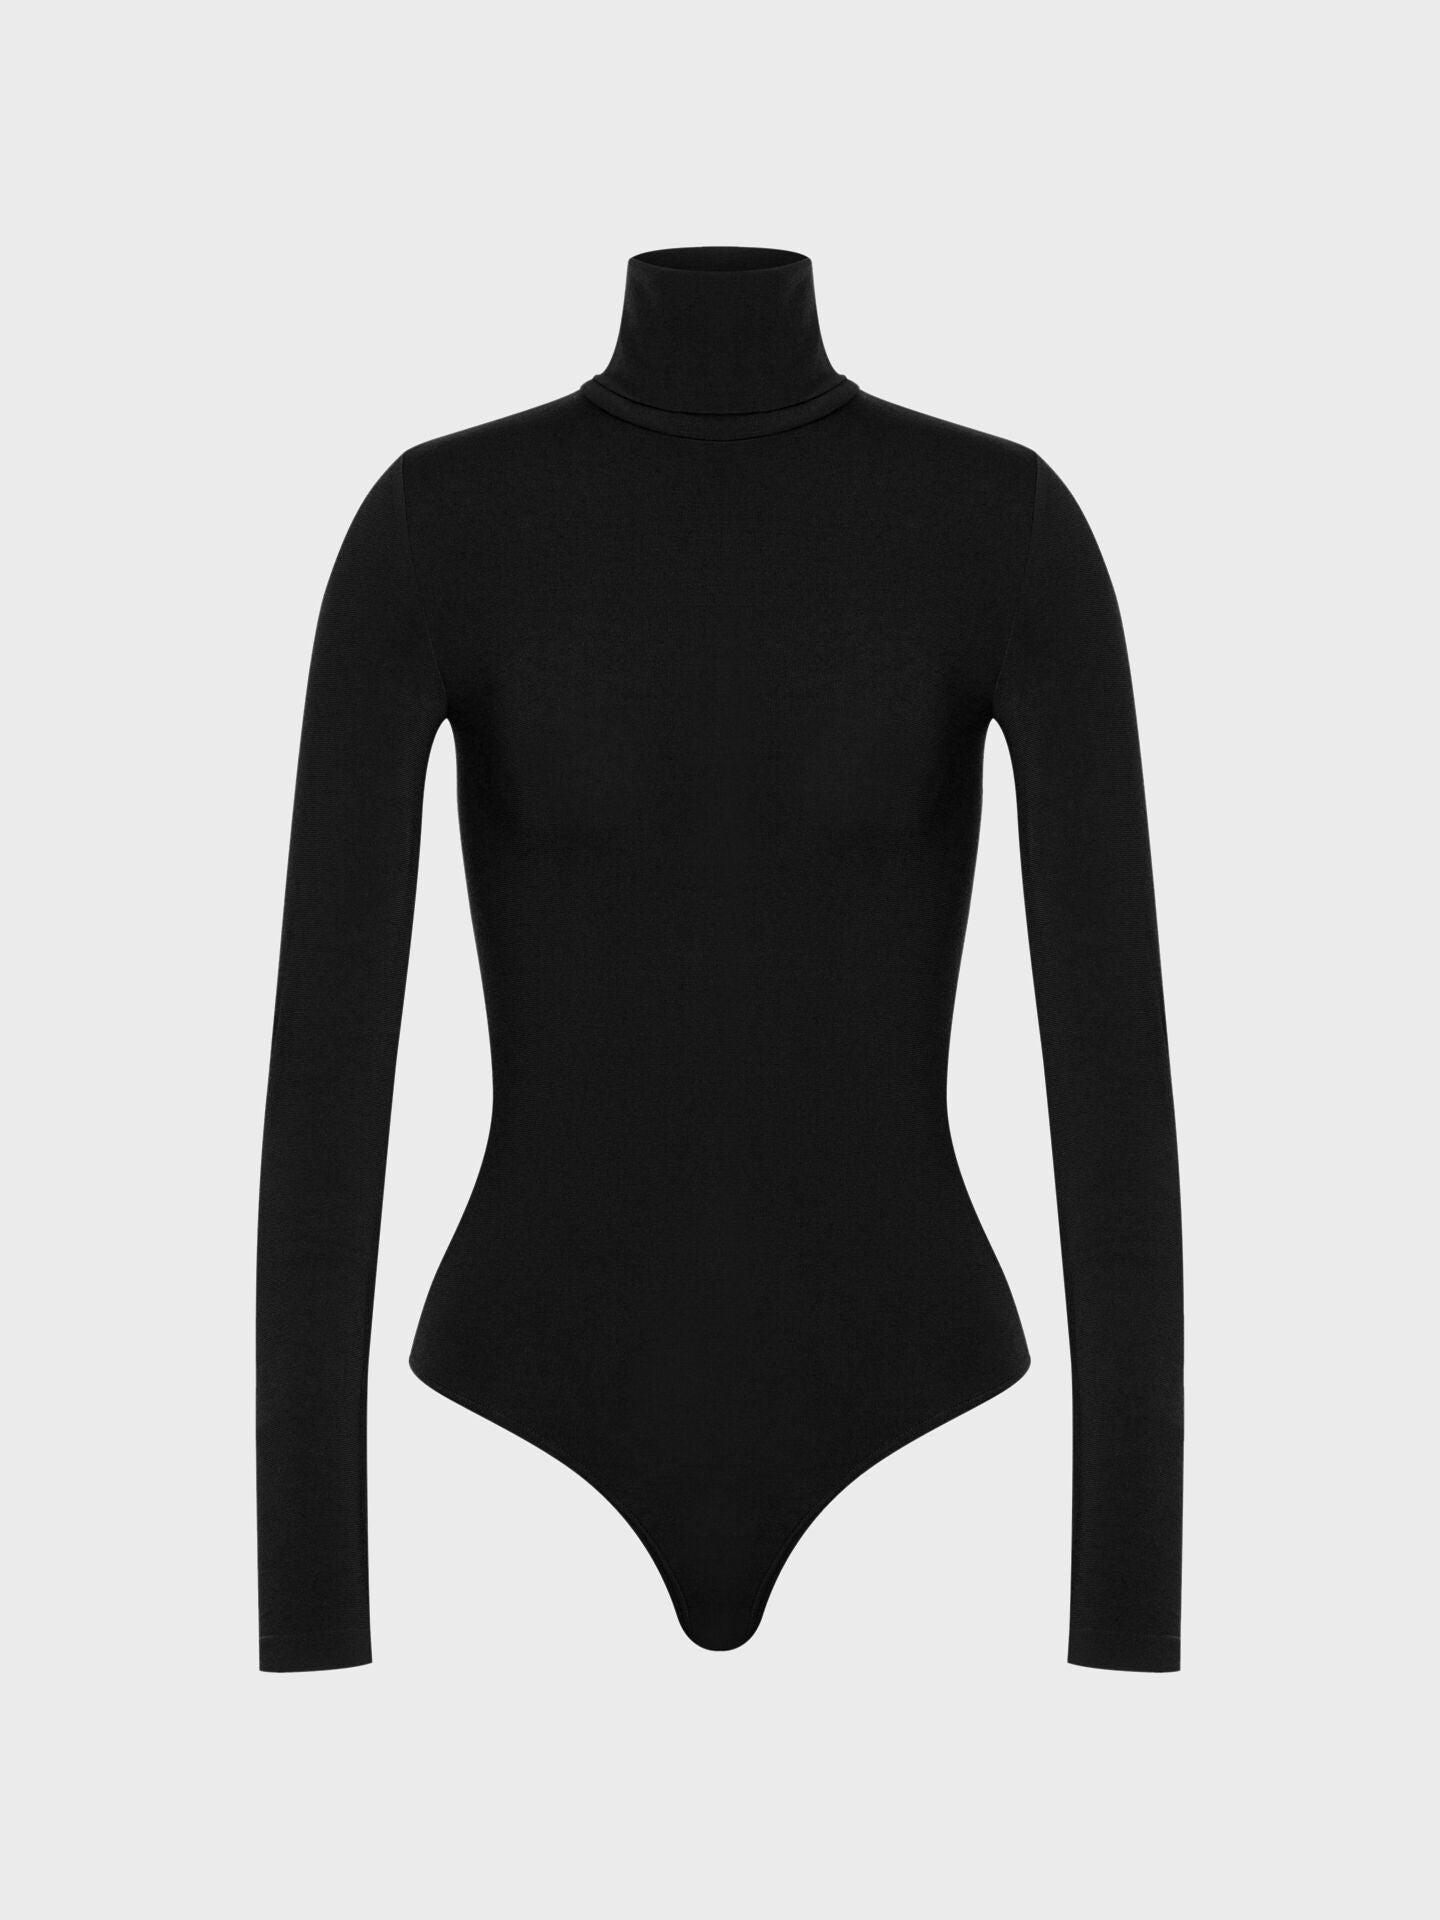 Buy Wolford Women's Tokio String Bodysuit, Black, Small at